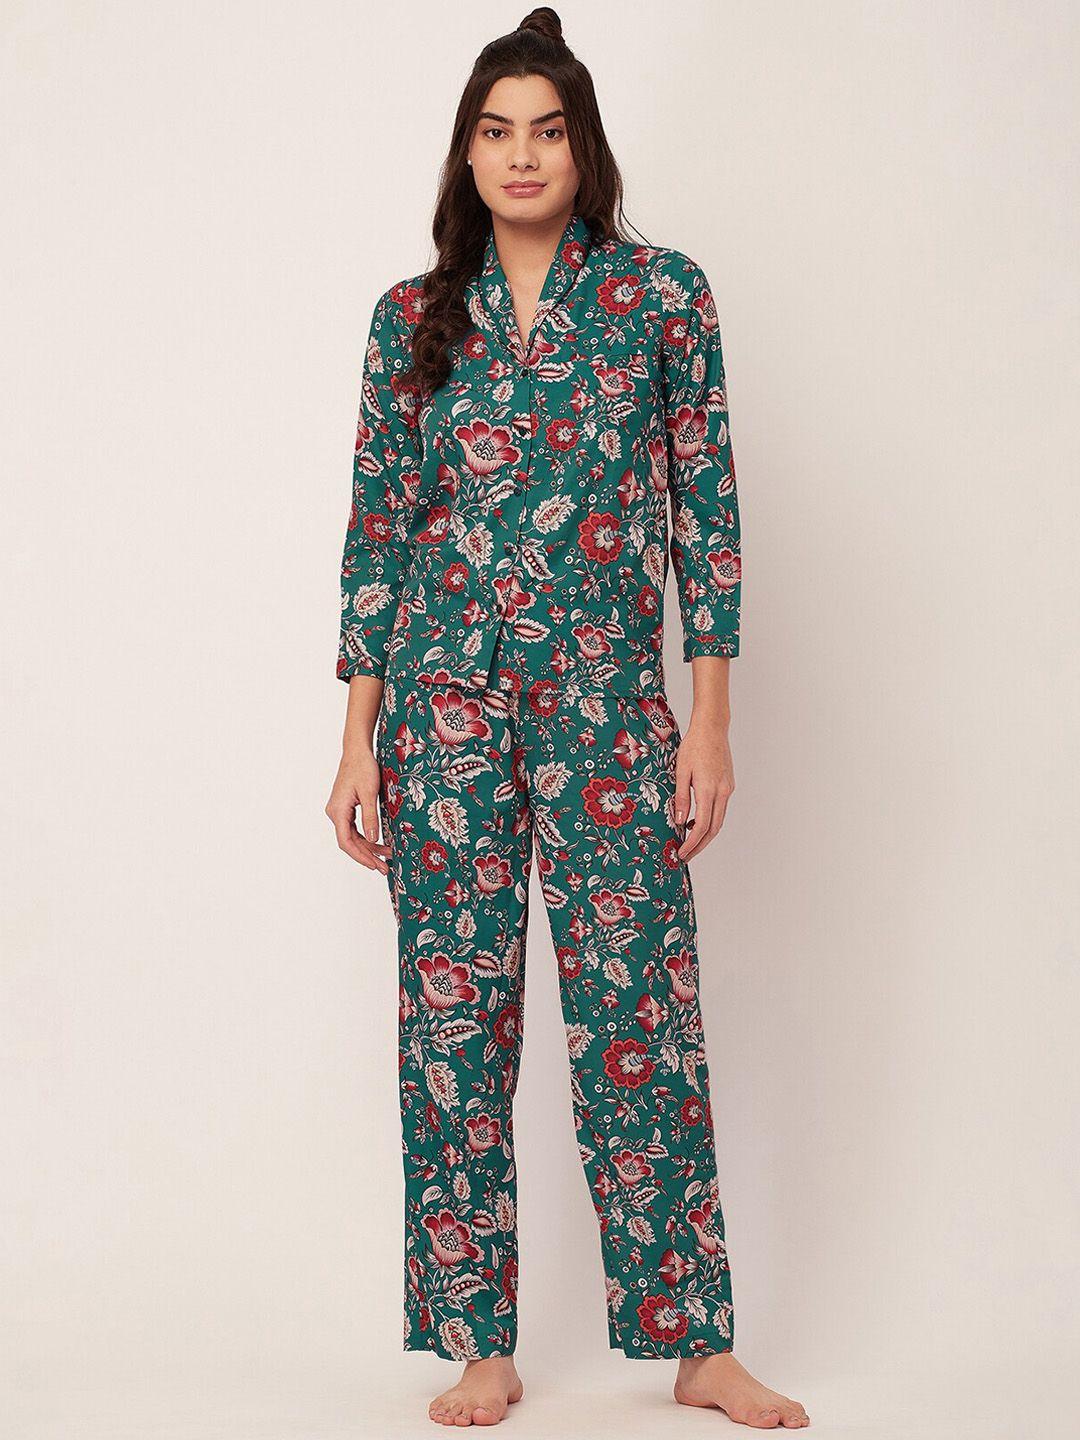 moomaya floral printed satin night suit